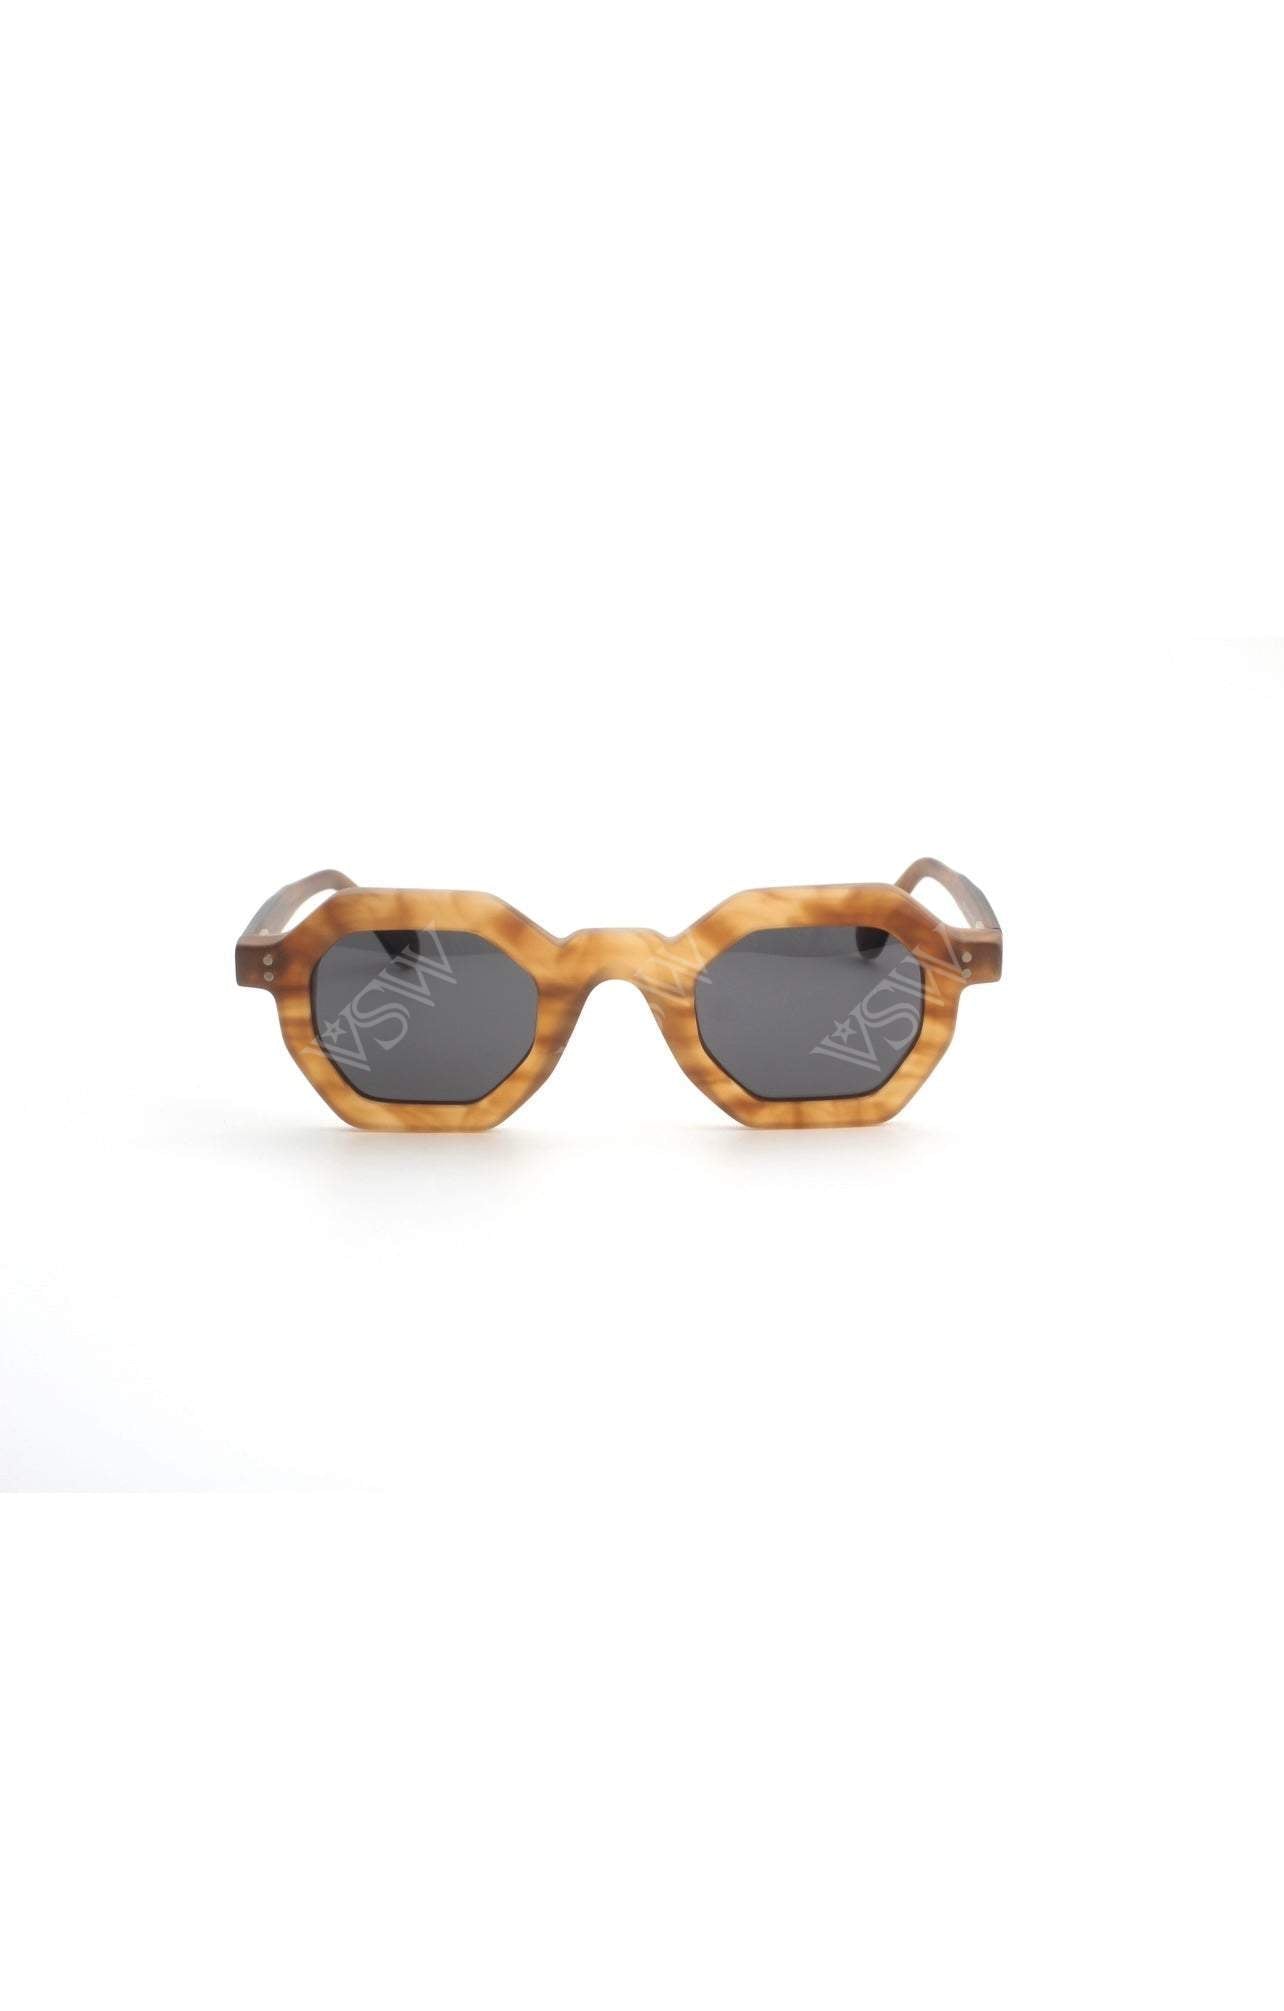 Sunglass Bali - Sunglasses from [store] by VSW - women sunglasses